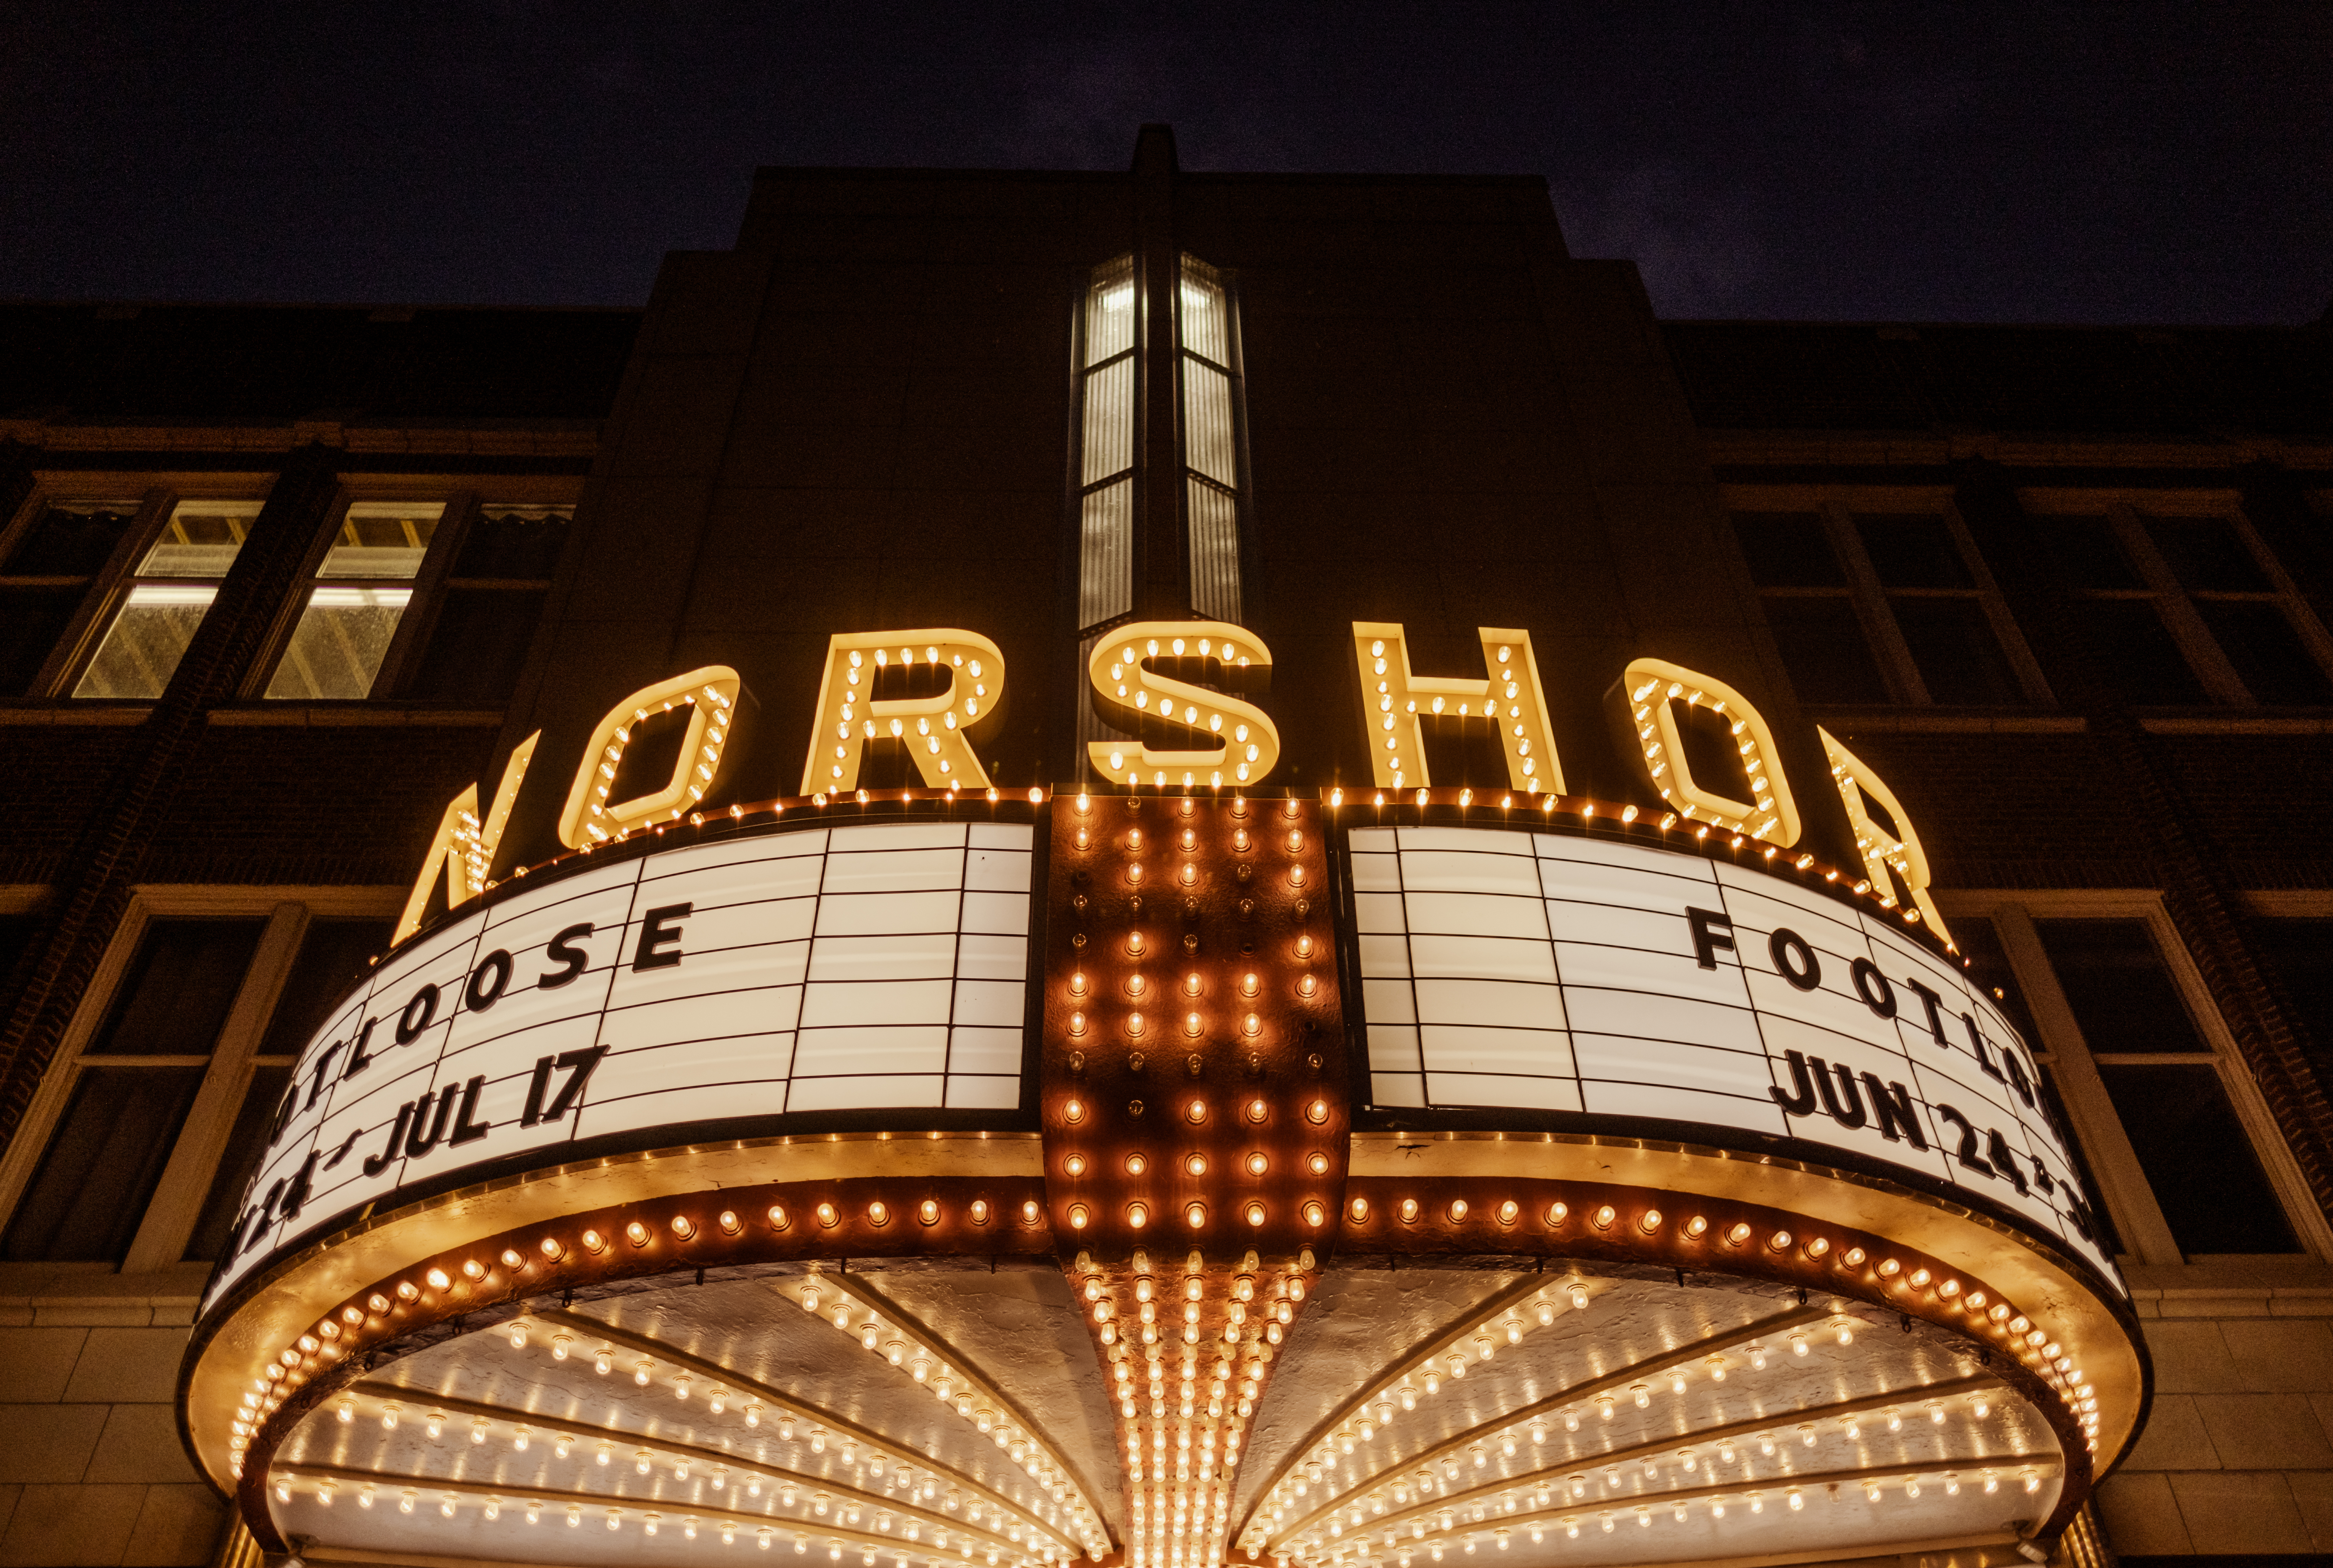 NorShor Theatre marquee